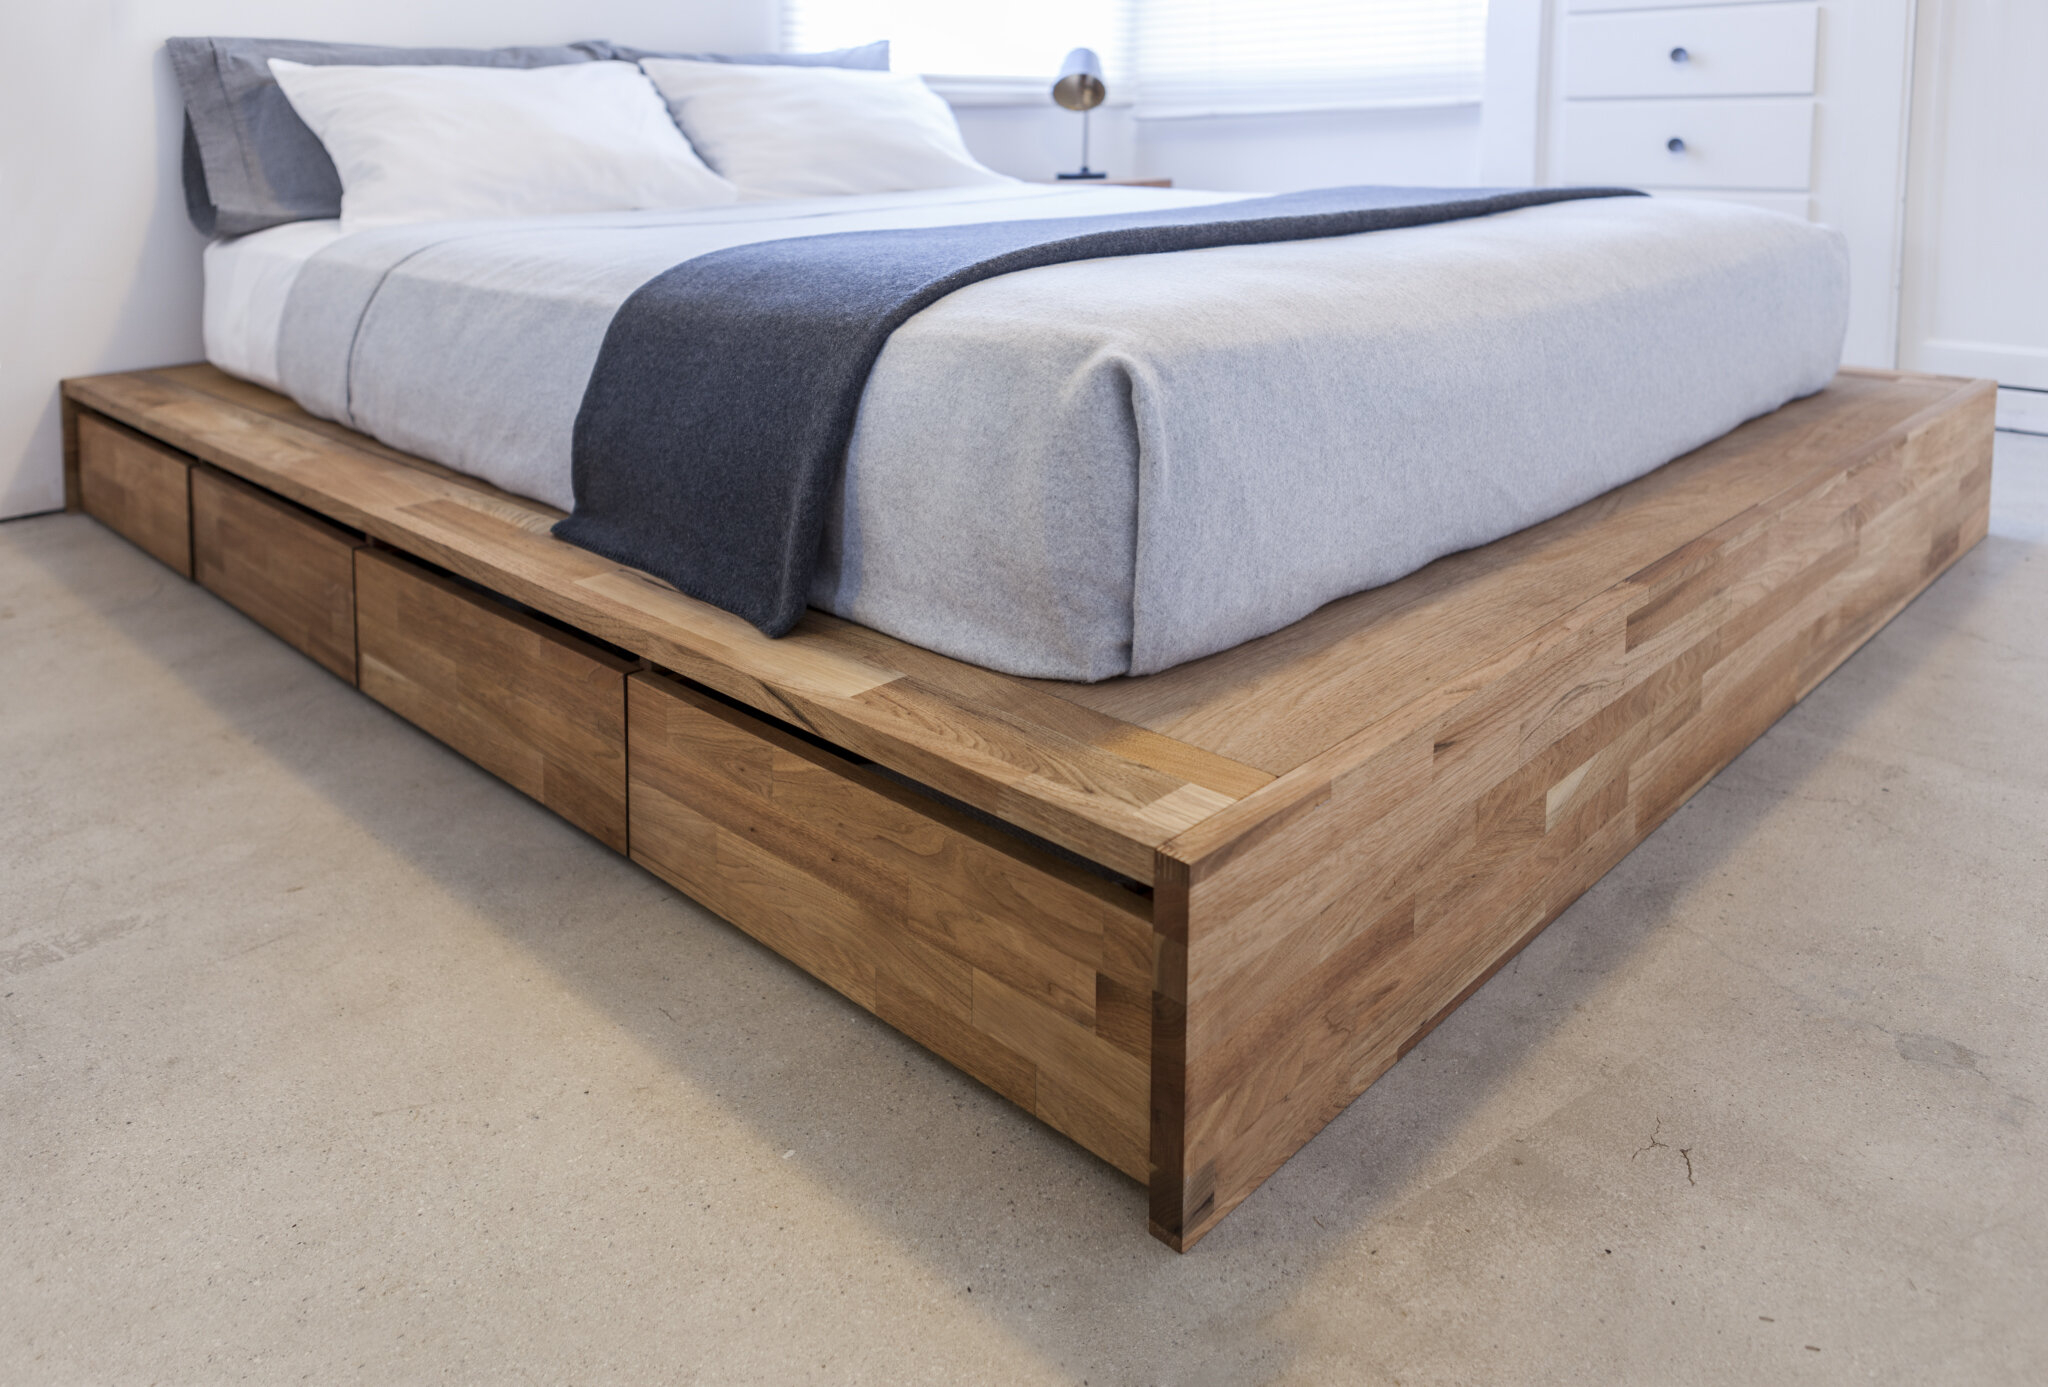 Bed With Storage Underneath Visualhunt, High Platform Bed With Storage Underneath